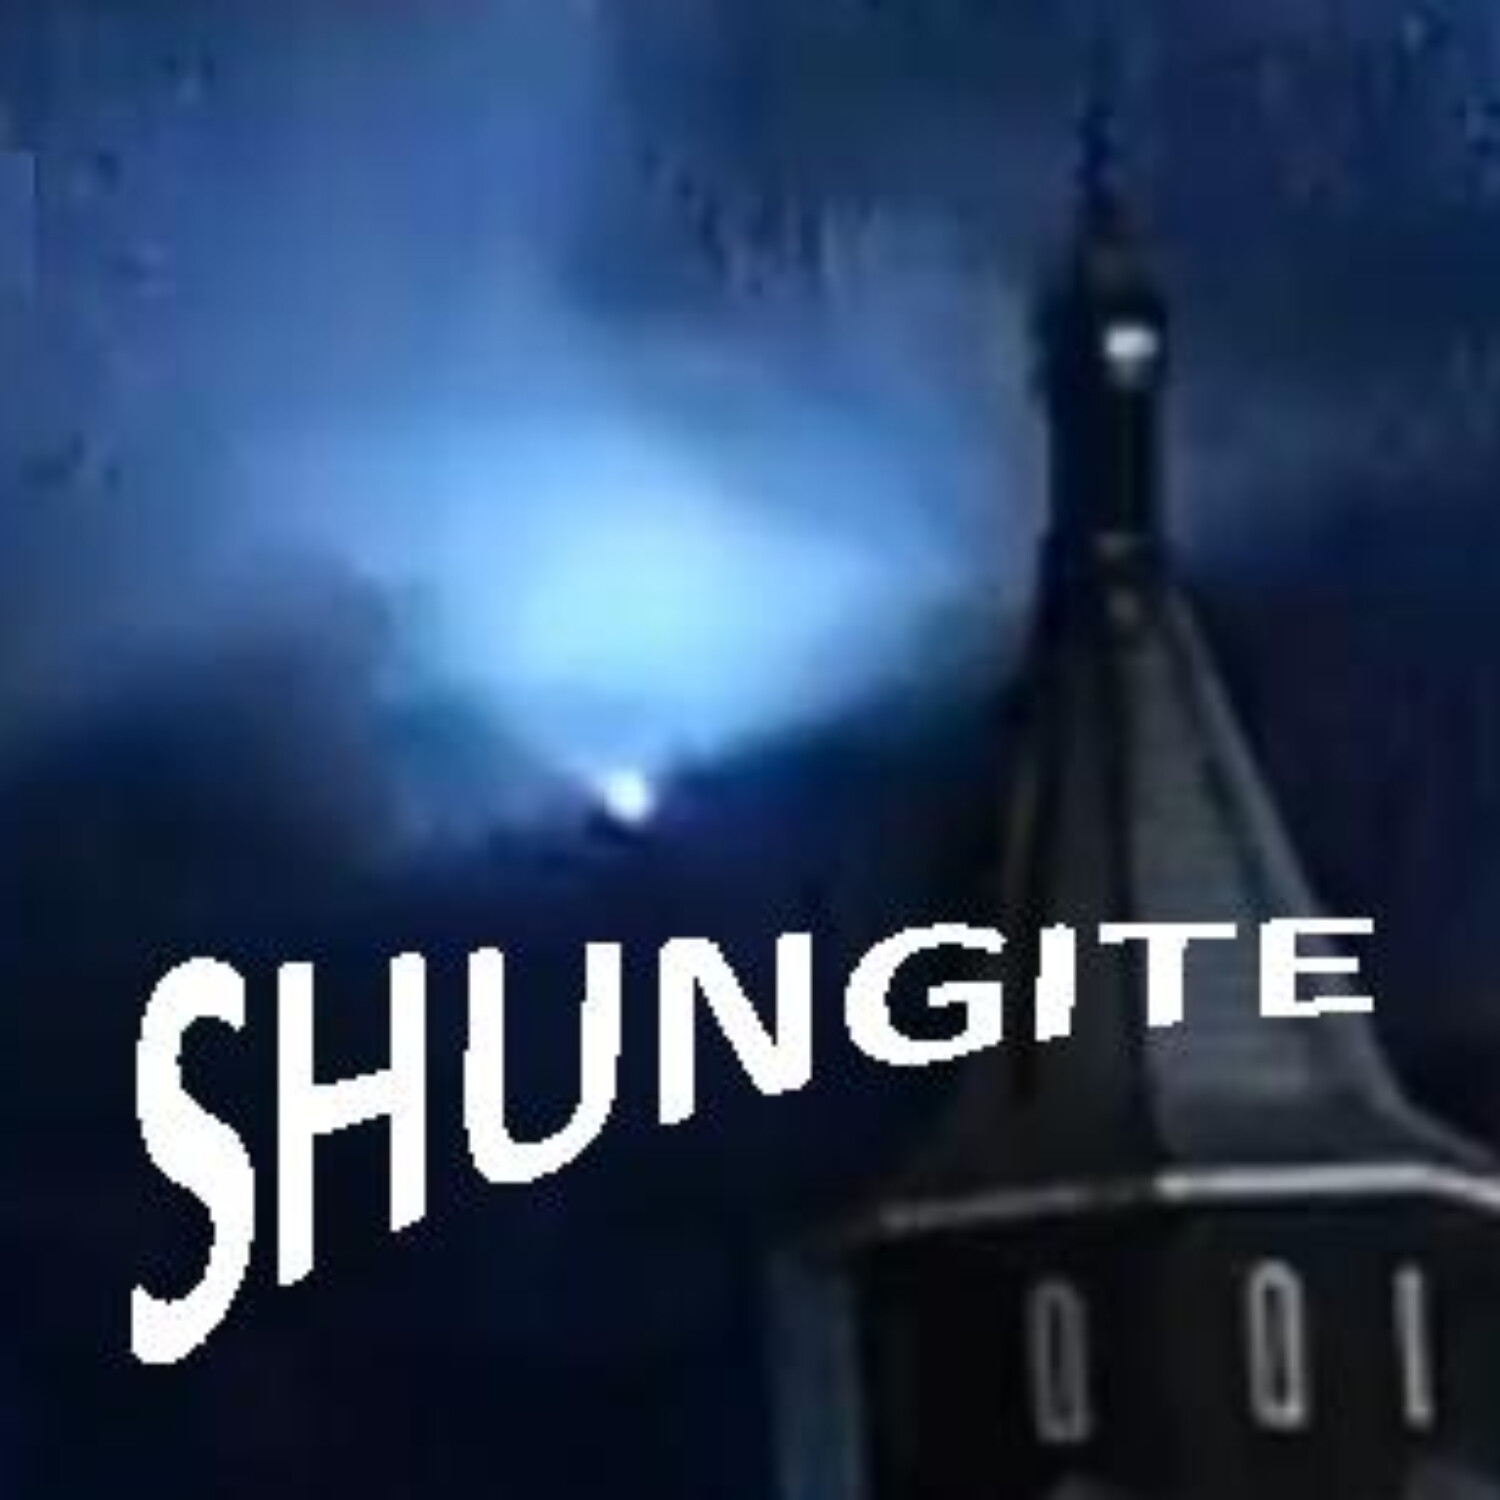 "SHUNGITE REALITY” 12/21/21 - Eagles & Mineral Magic